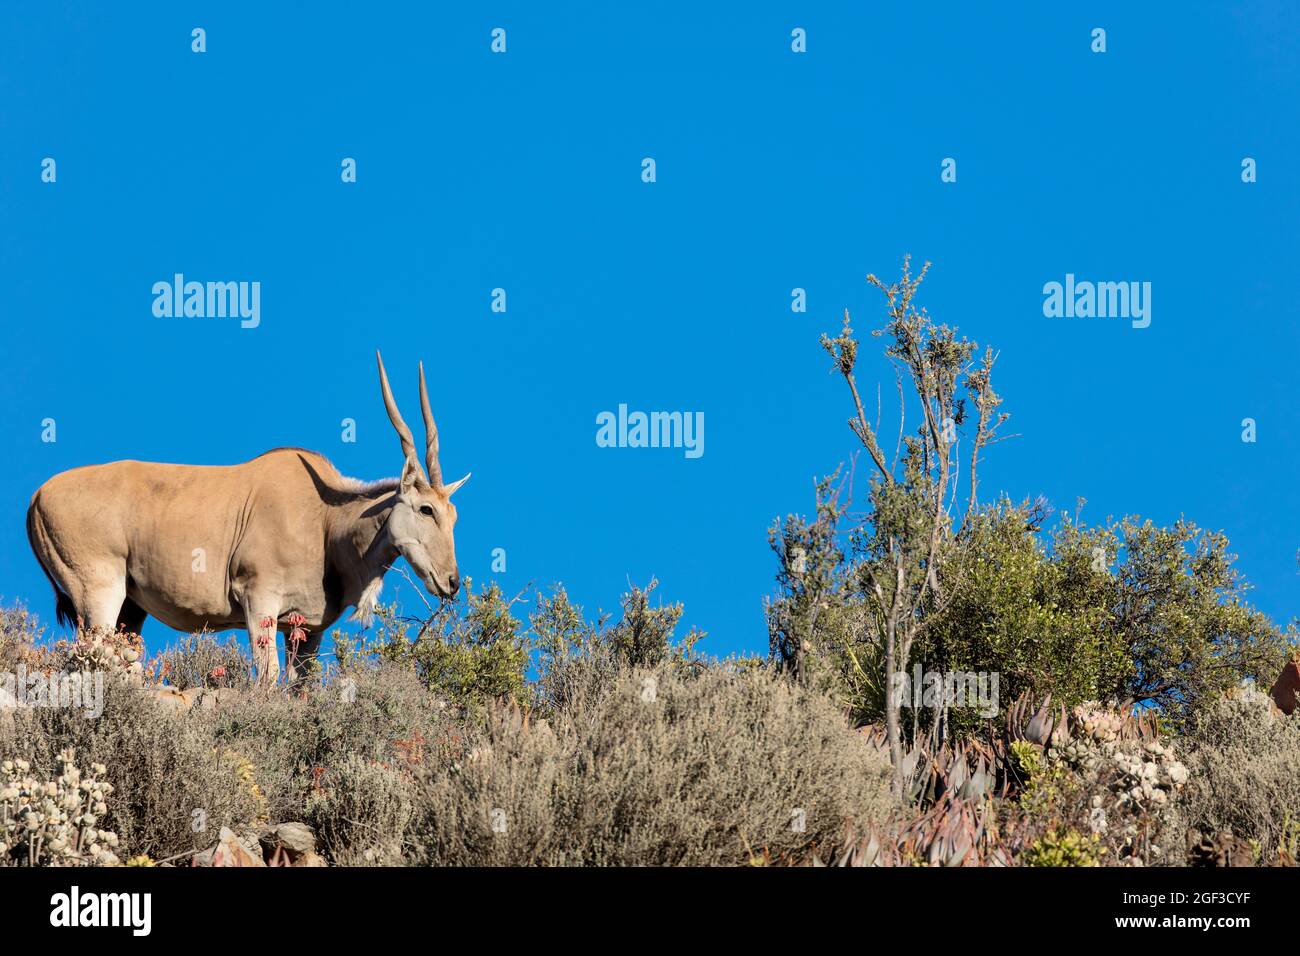 Eland (Taurotragus oryx) in typical karoo vegetation. Karoo, Western Cape, South Africa Stock Photo